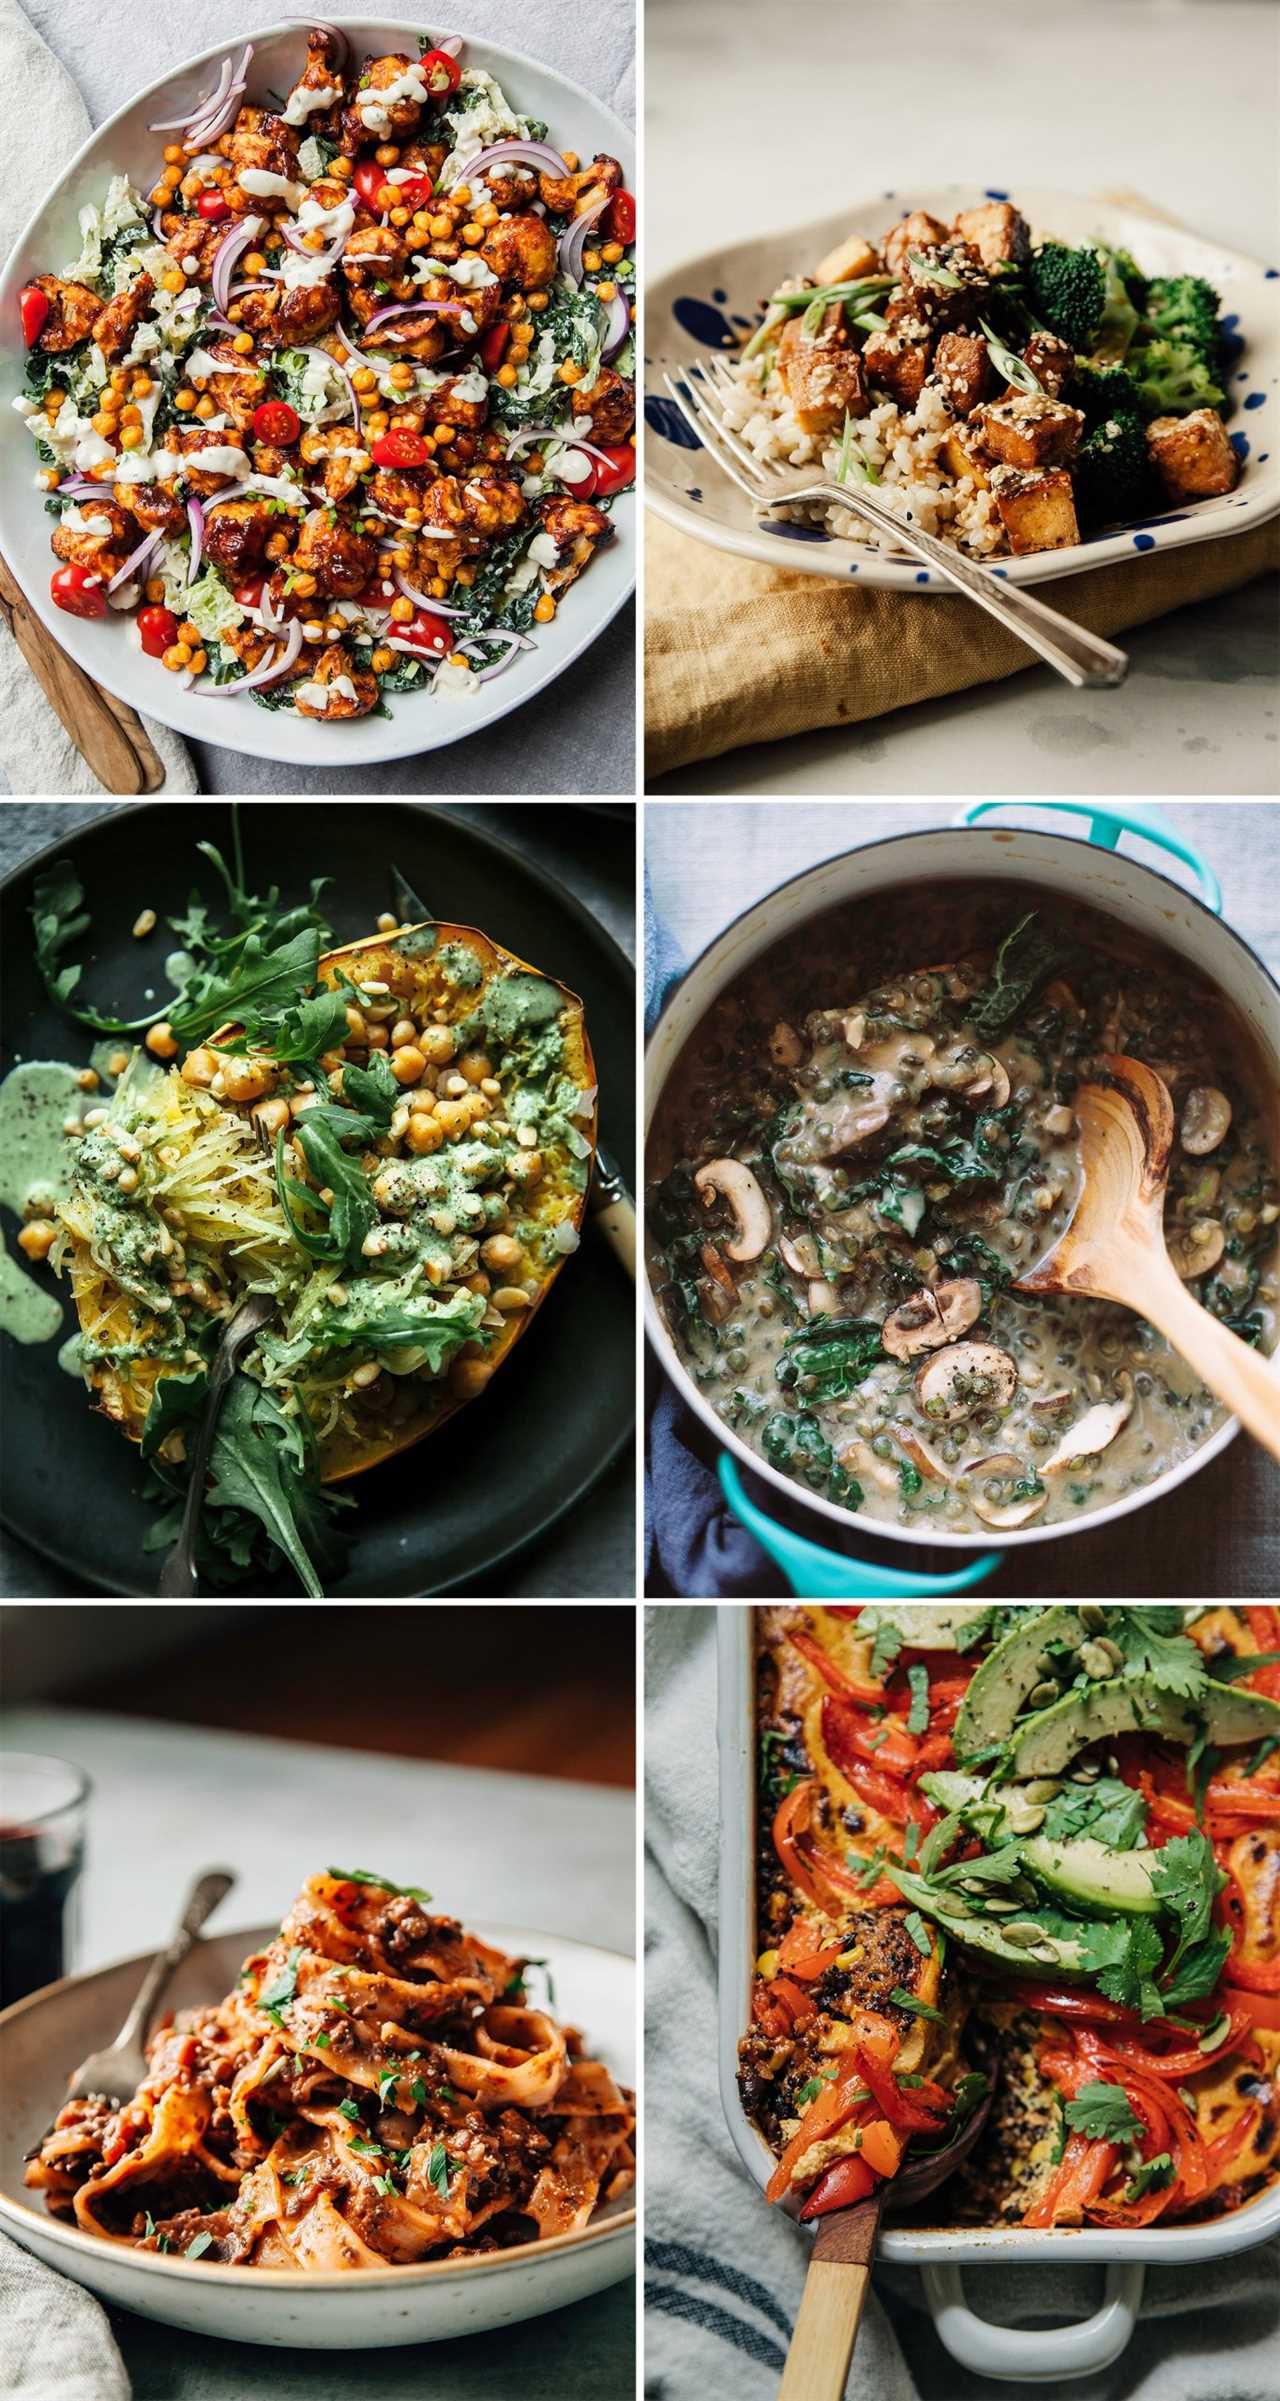 BEST 10 VEGAN RECIPES | Hummus, Falafel, Shakshuka, Charcoaled Eggplant and more